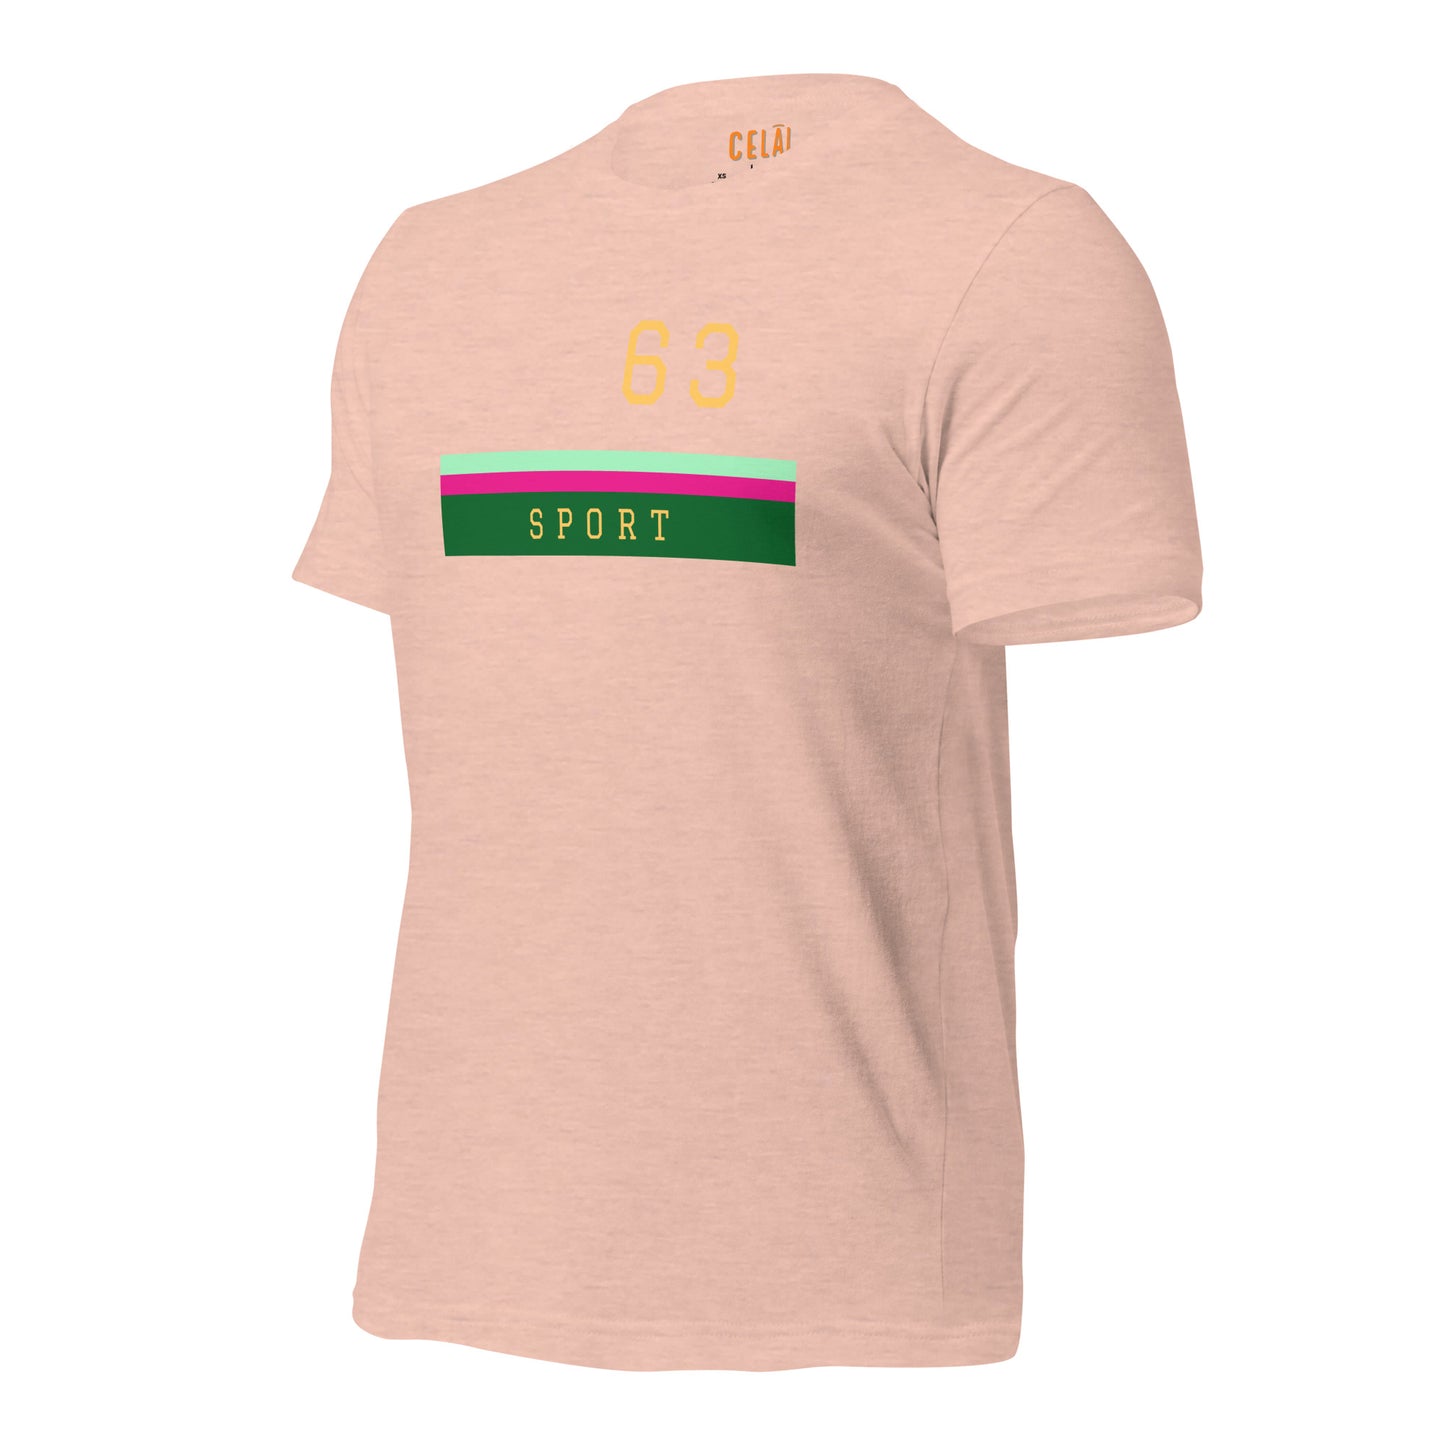 63 Unisex t-shirt